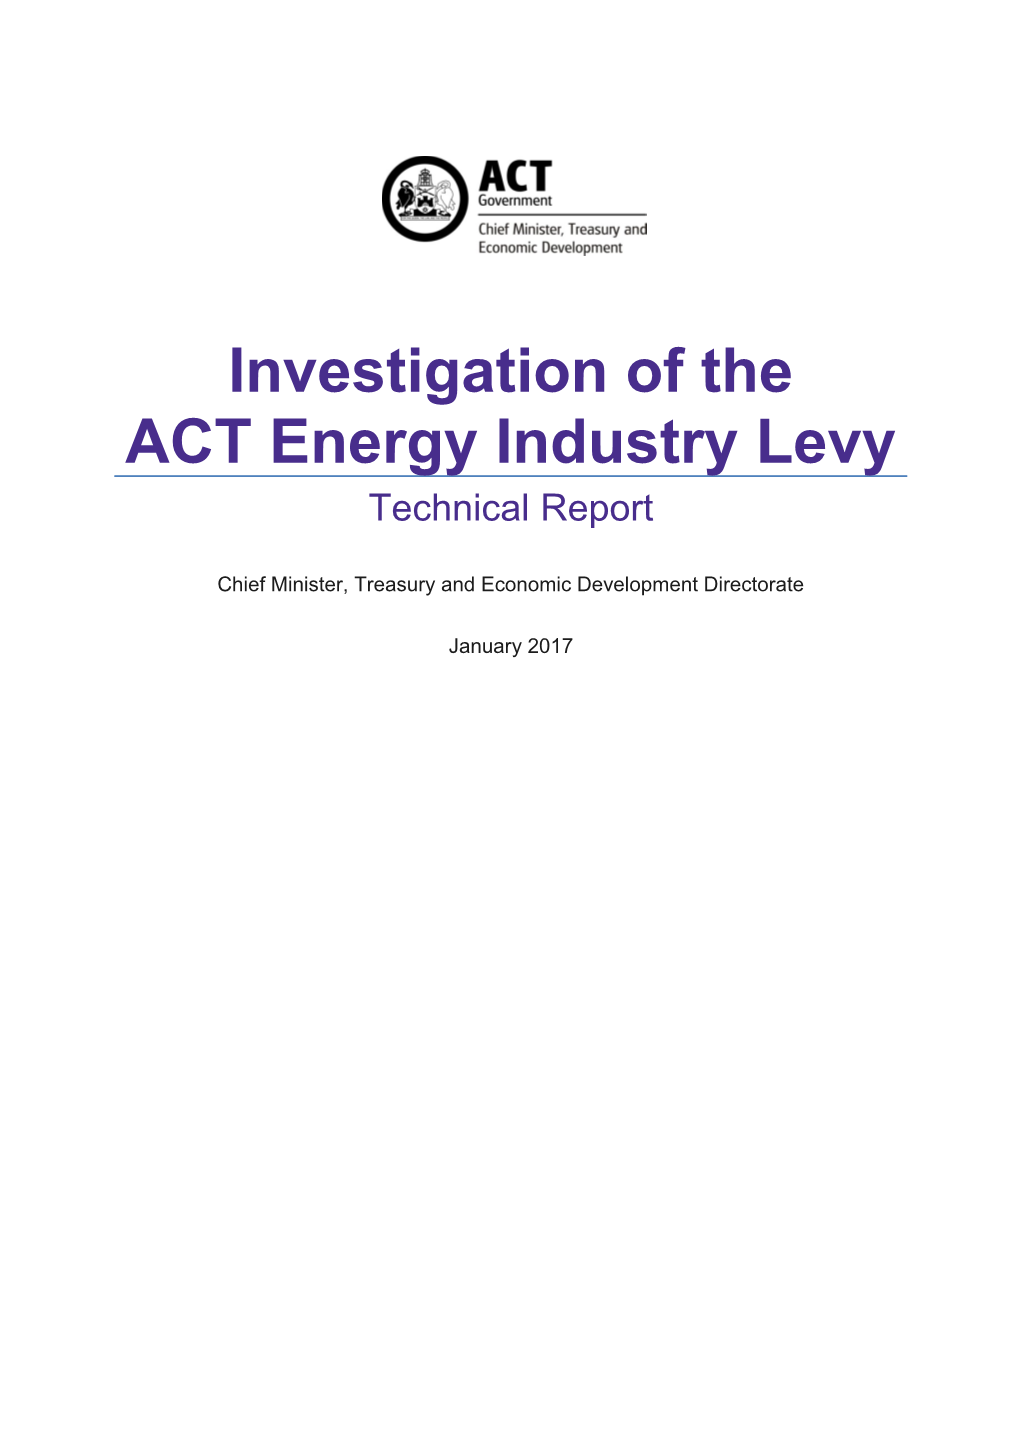 EIL Investigation Technical Report